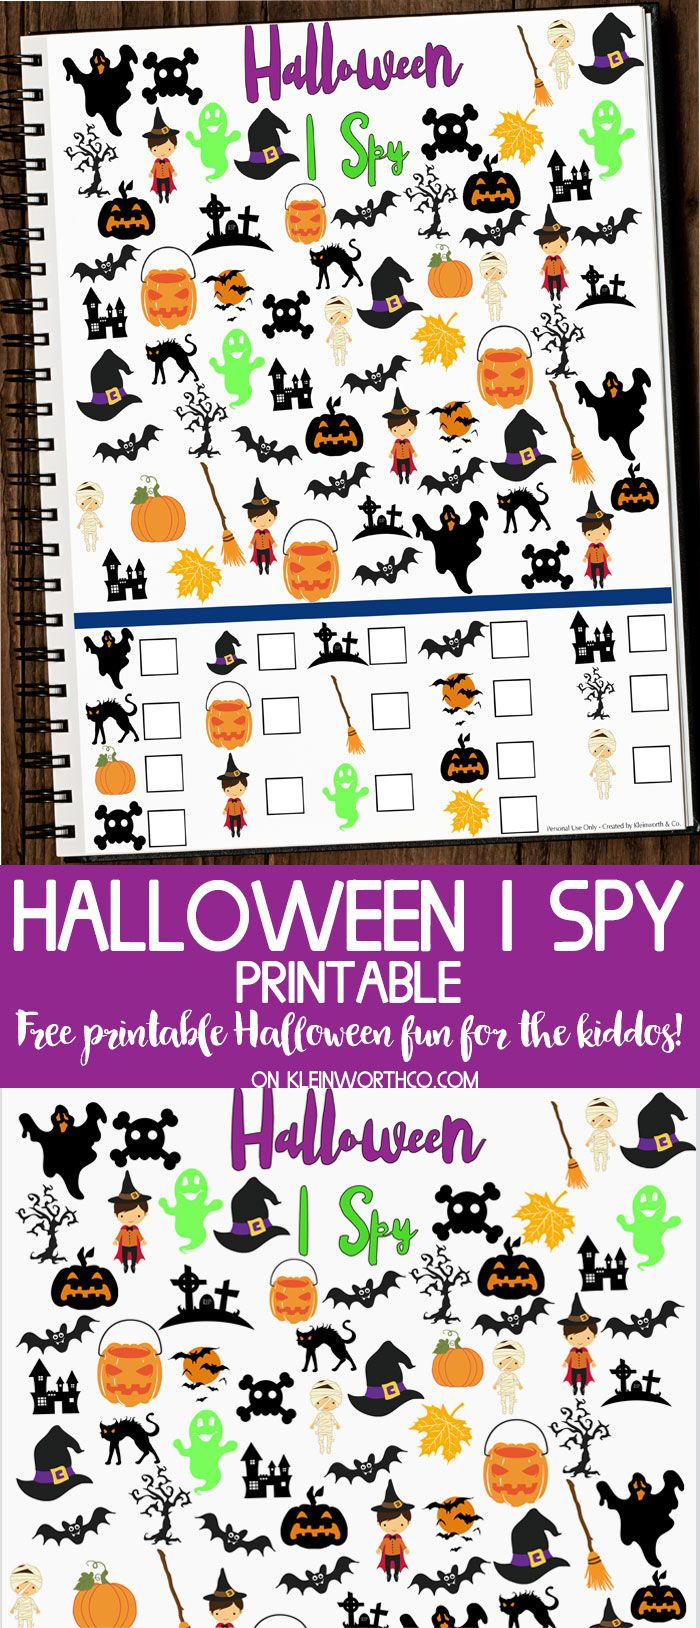 Free Halloween I Spy Printable - Fun Printable To Get The